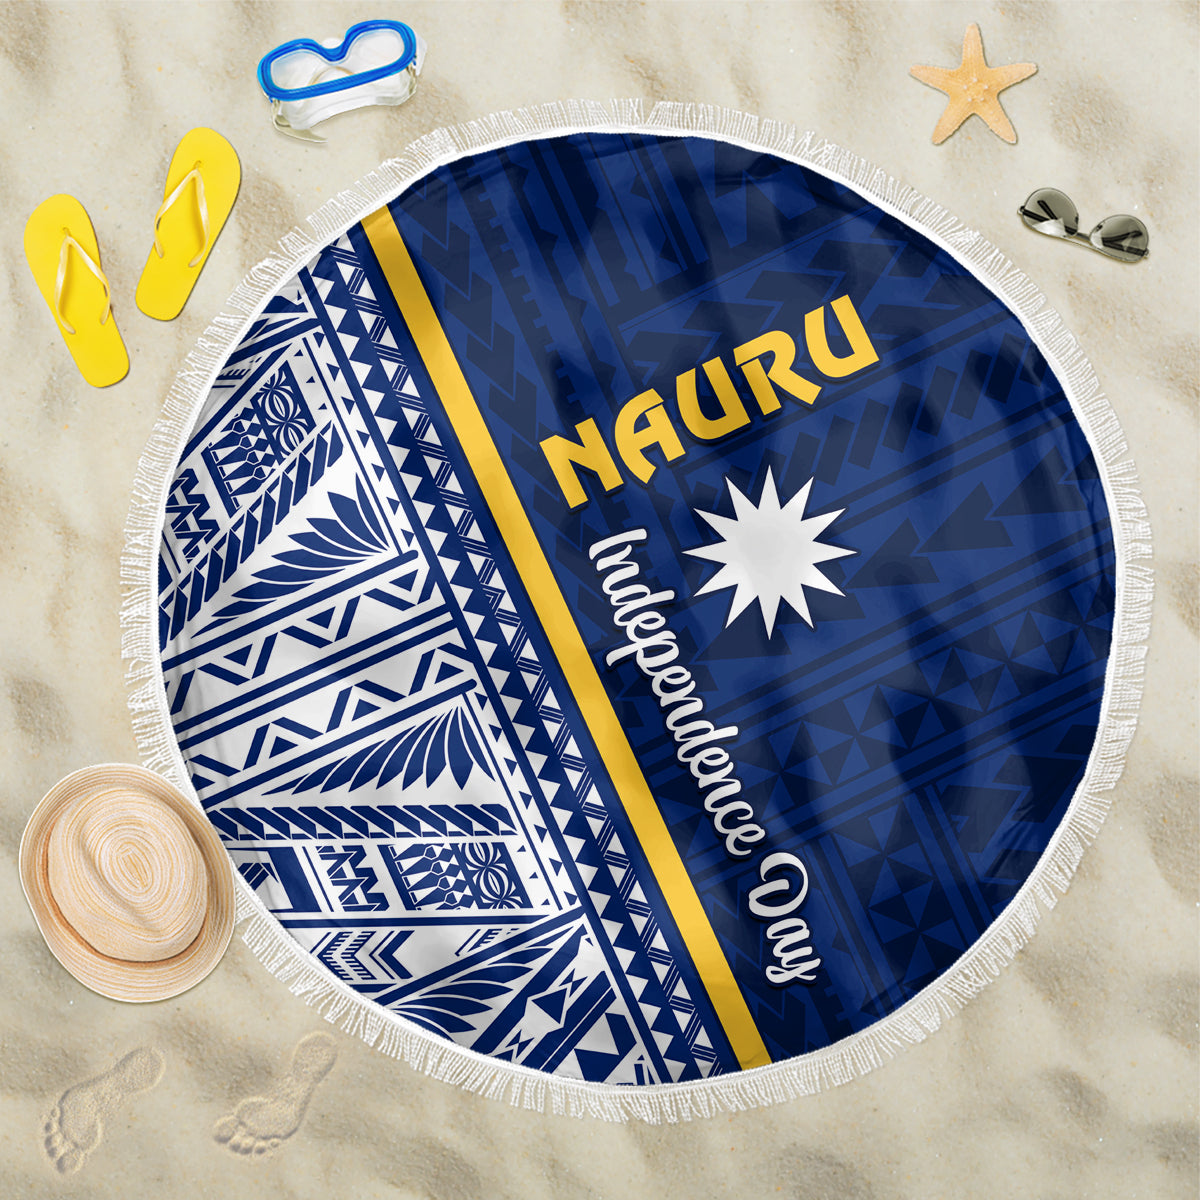 Nauru Independence Day Beach Blanket Repubrikin Naoero Gods Will First LT01 One Size 150cm Blue - Polynesian Pride